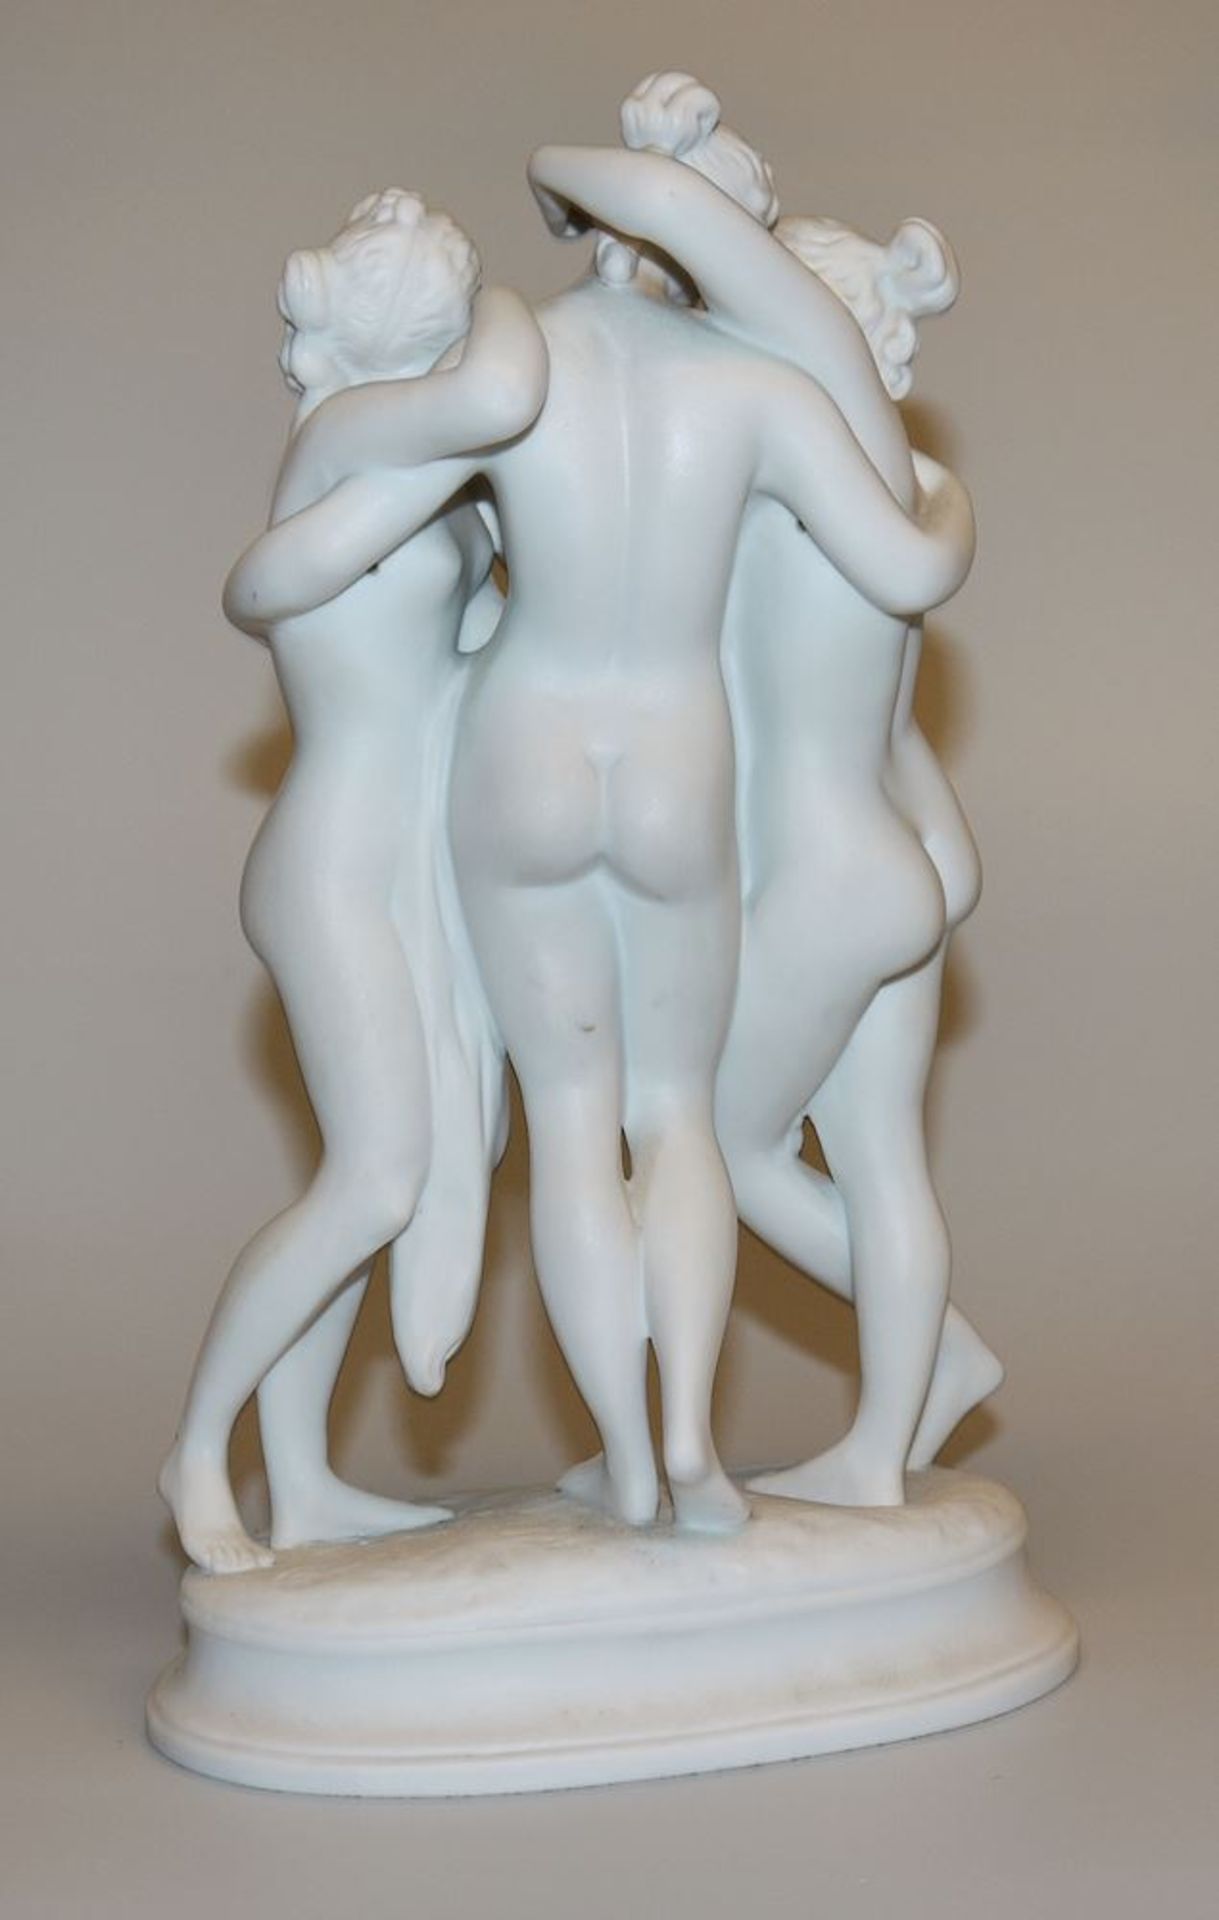 Porcelain group "Three Graces" after Antonio Canova, Hutschenreuther, Probstzella, c. 1880/1900 - Image 2 of 2